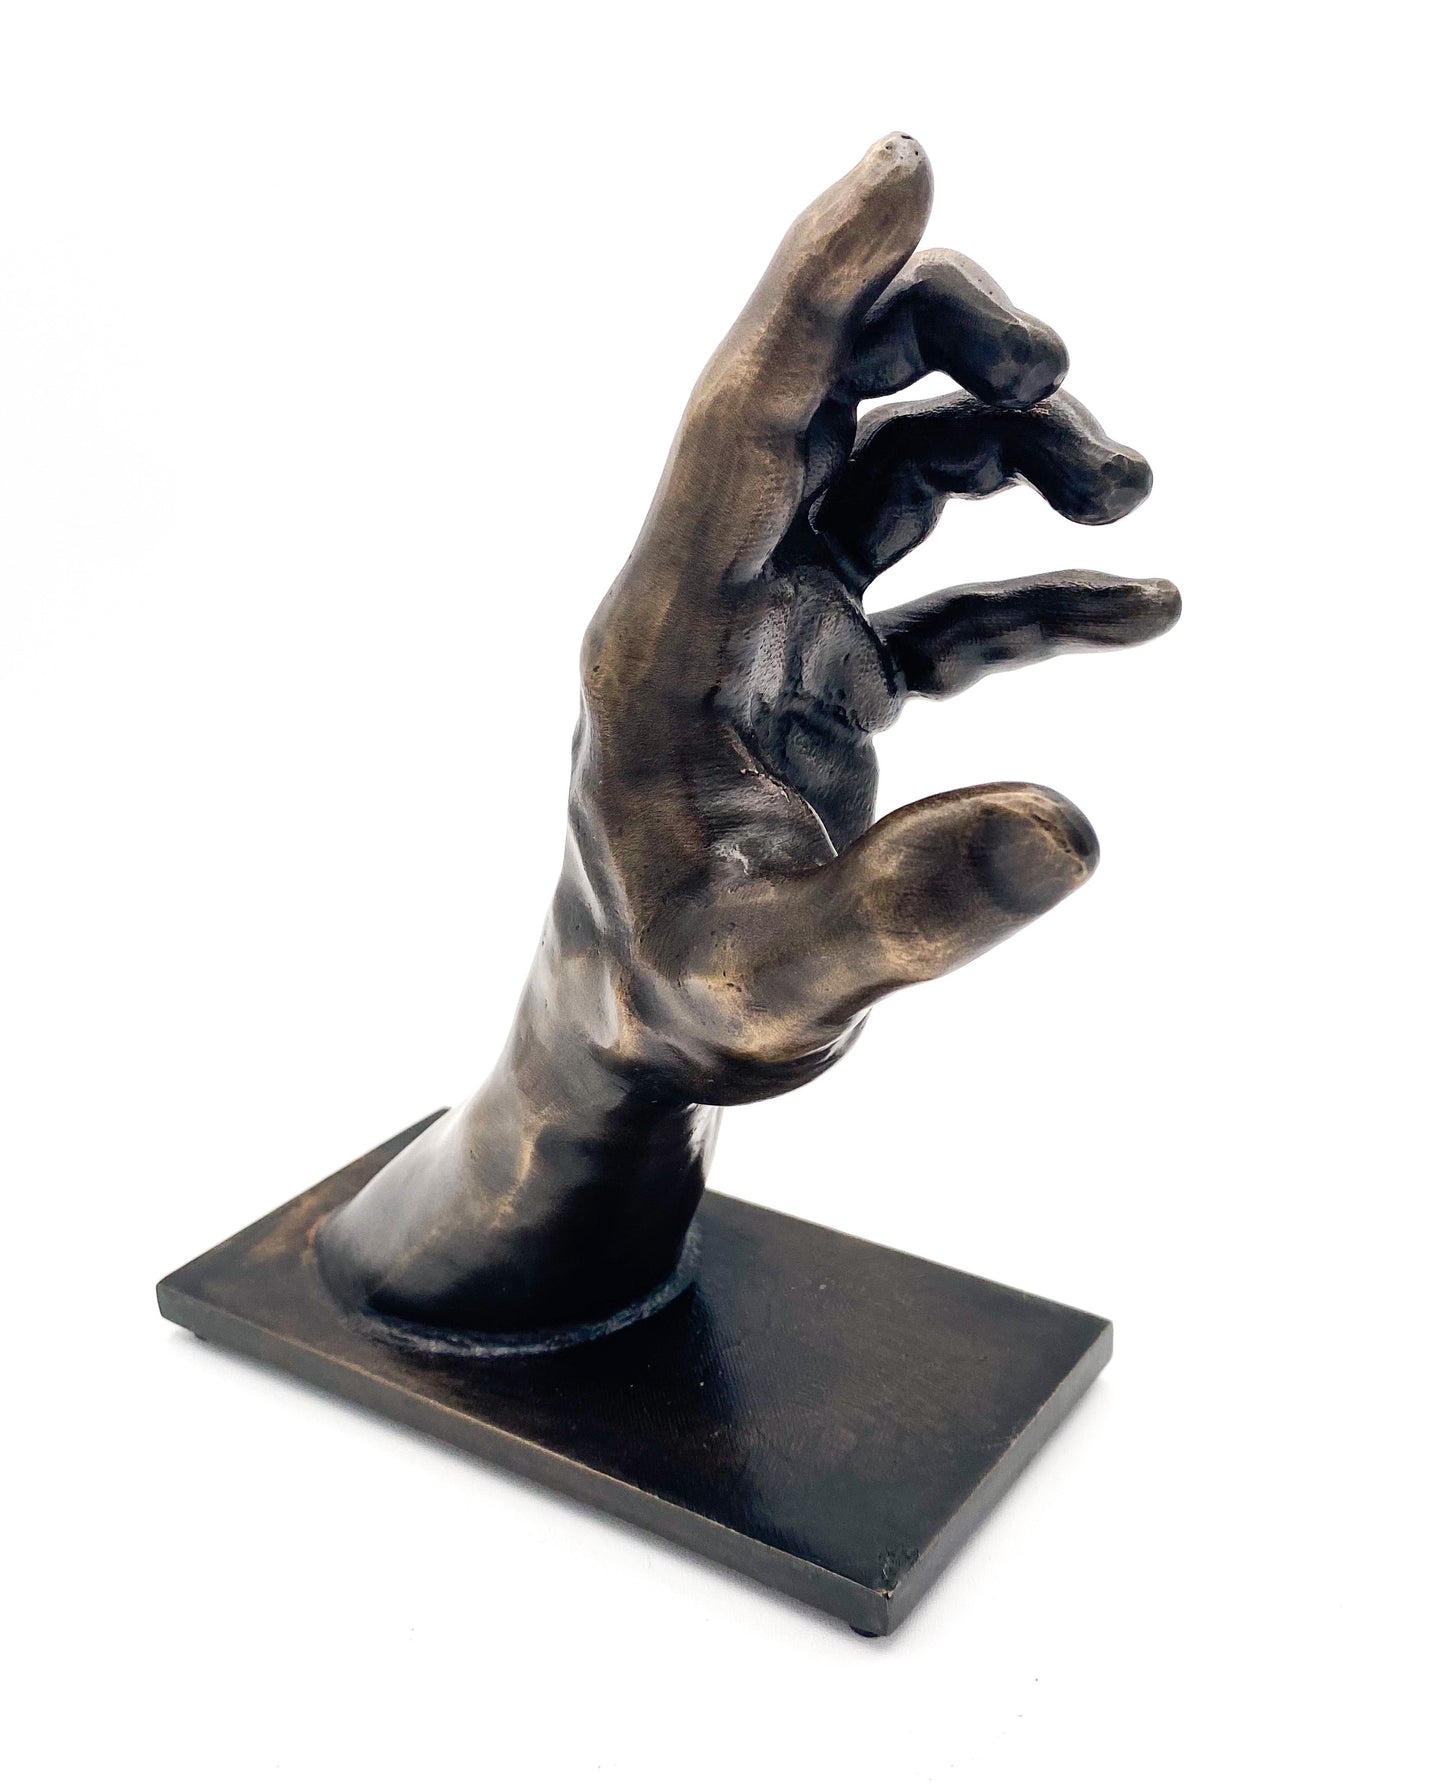 Maquette Series I - Inverted Left Hand Model